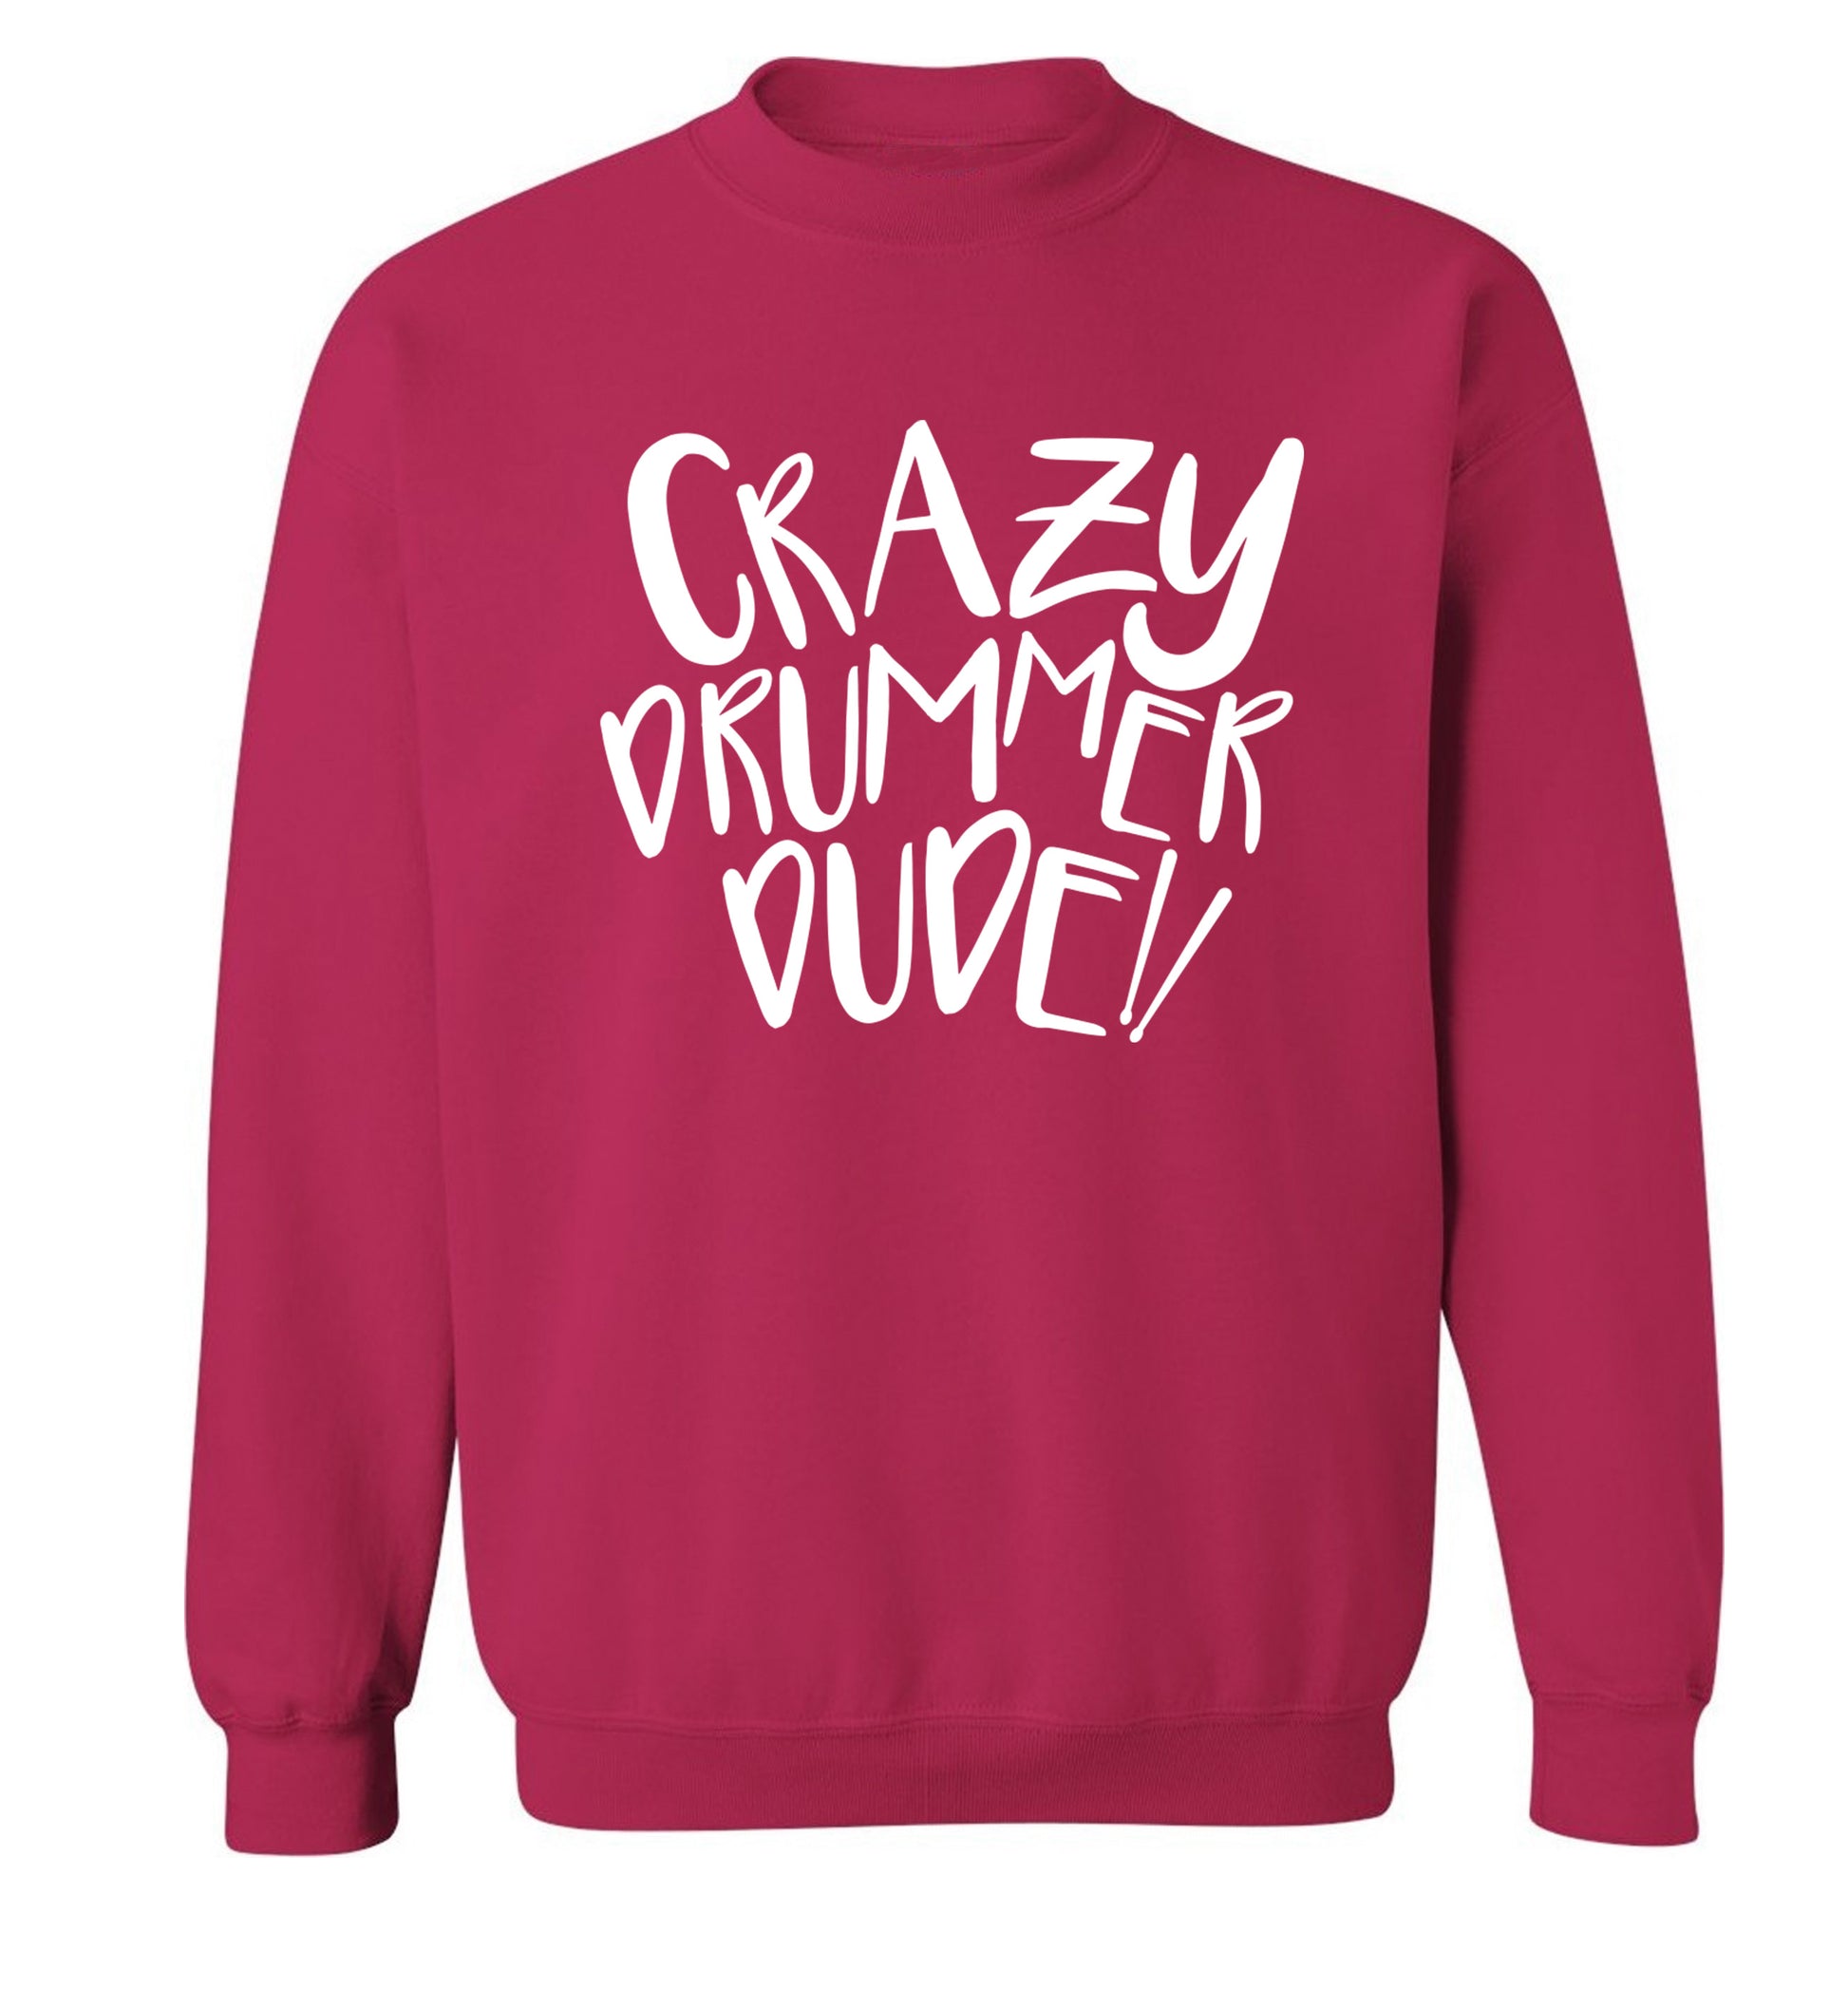 Crazy drummer dude Adult's unisex pink Sweater 2XL